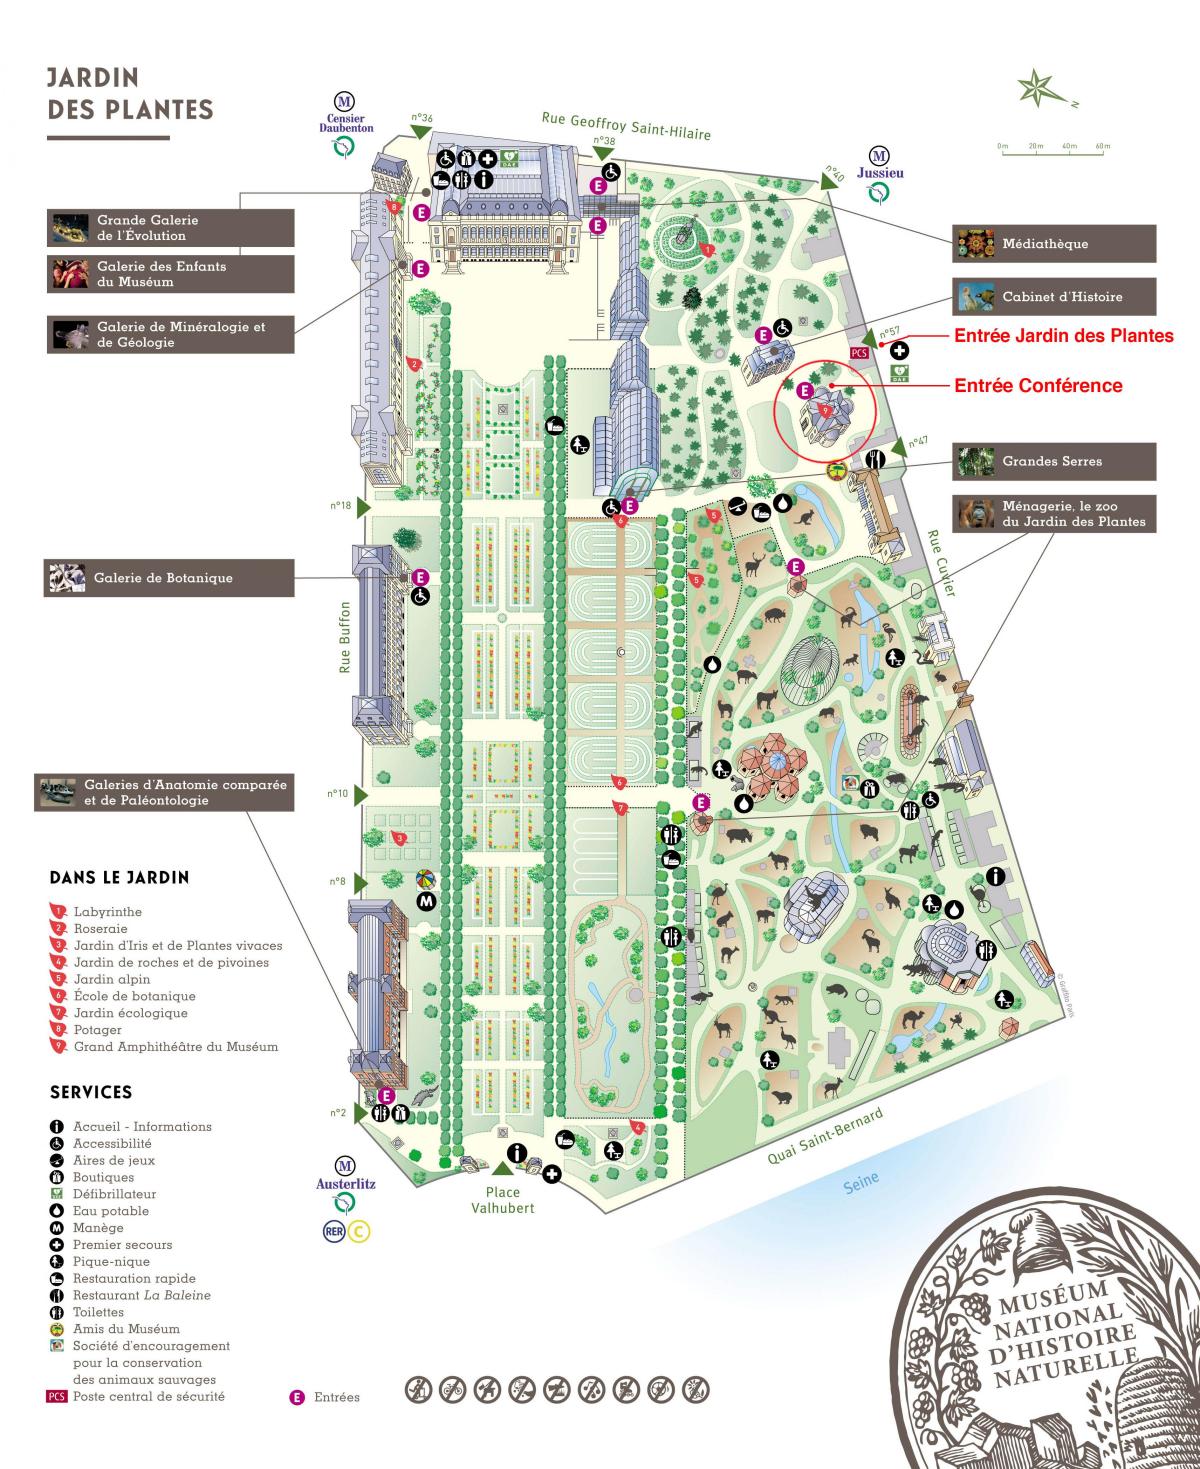 Zemljevid Jardin des Plantes